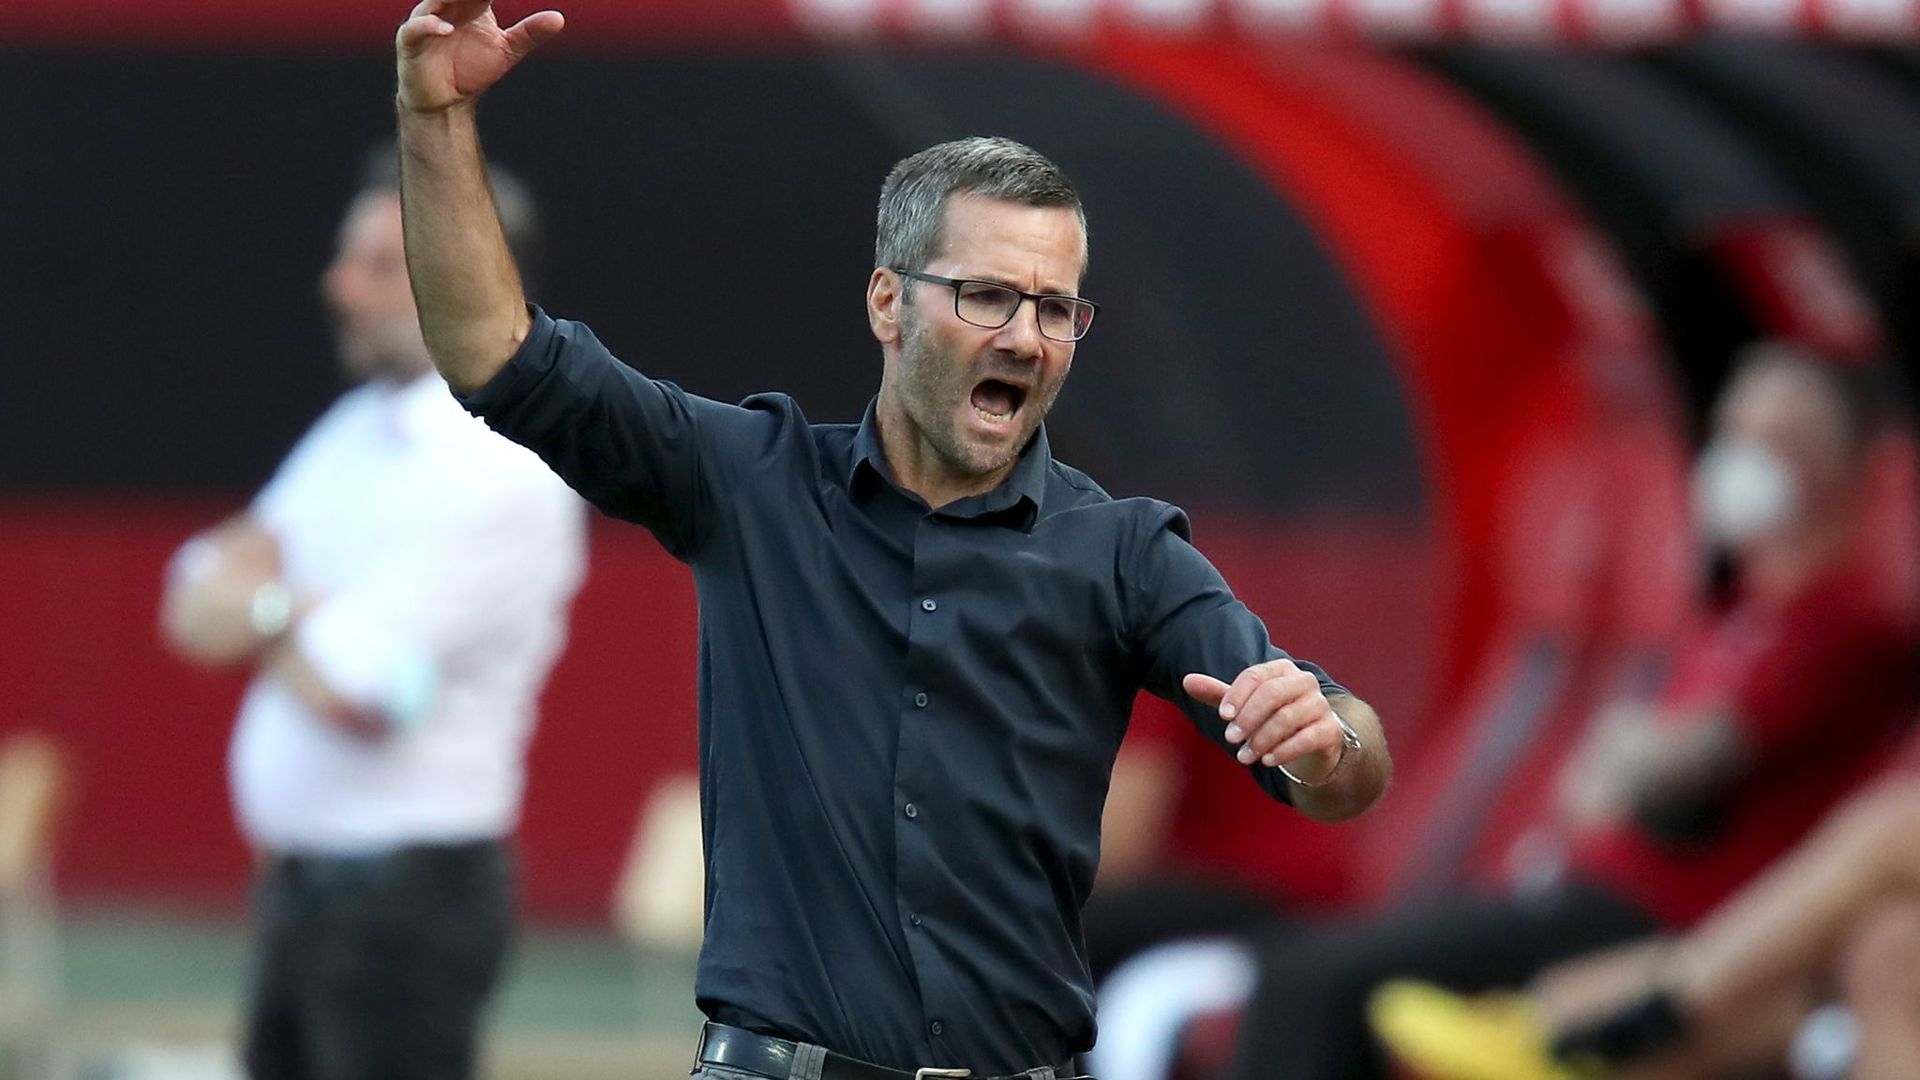 Nürnbergs Trainer Michael Wiesinger gestikuliert am Spielfeldrand.